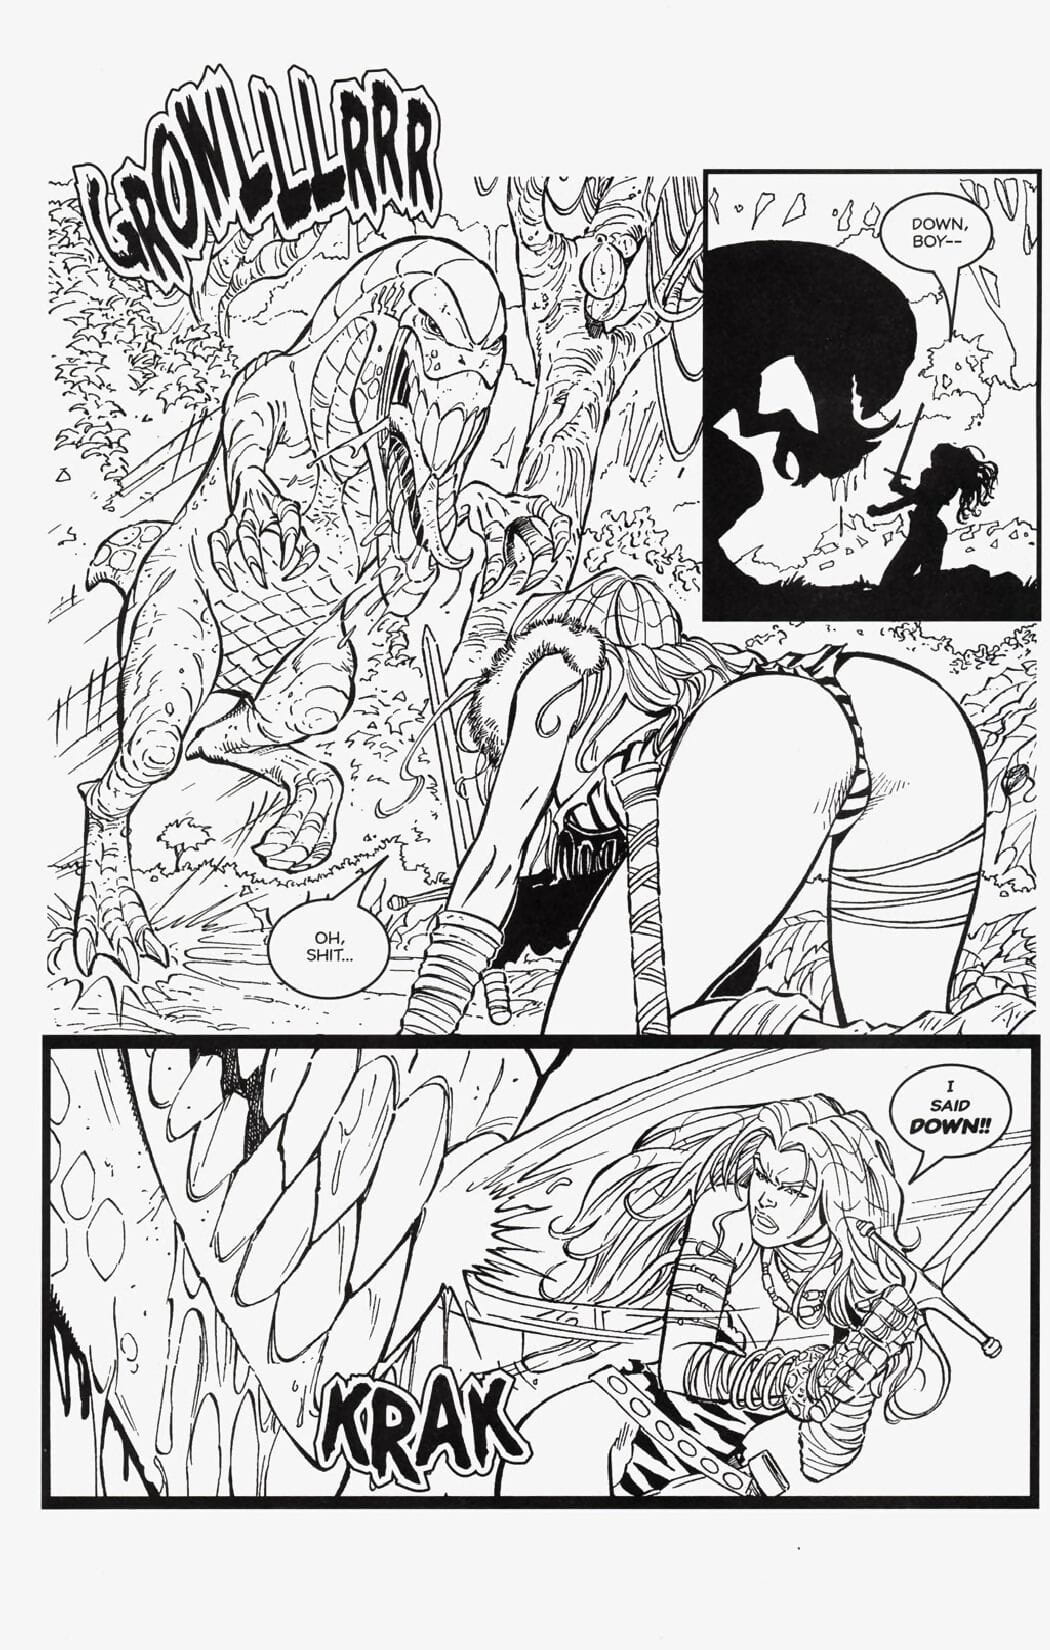 Ana - Jungle Girl page 1